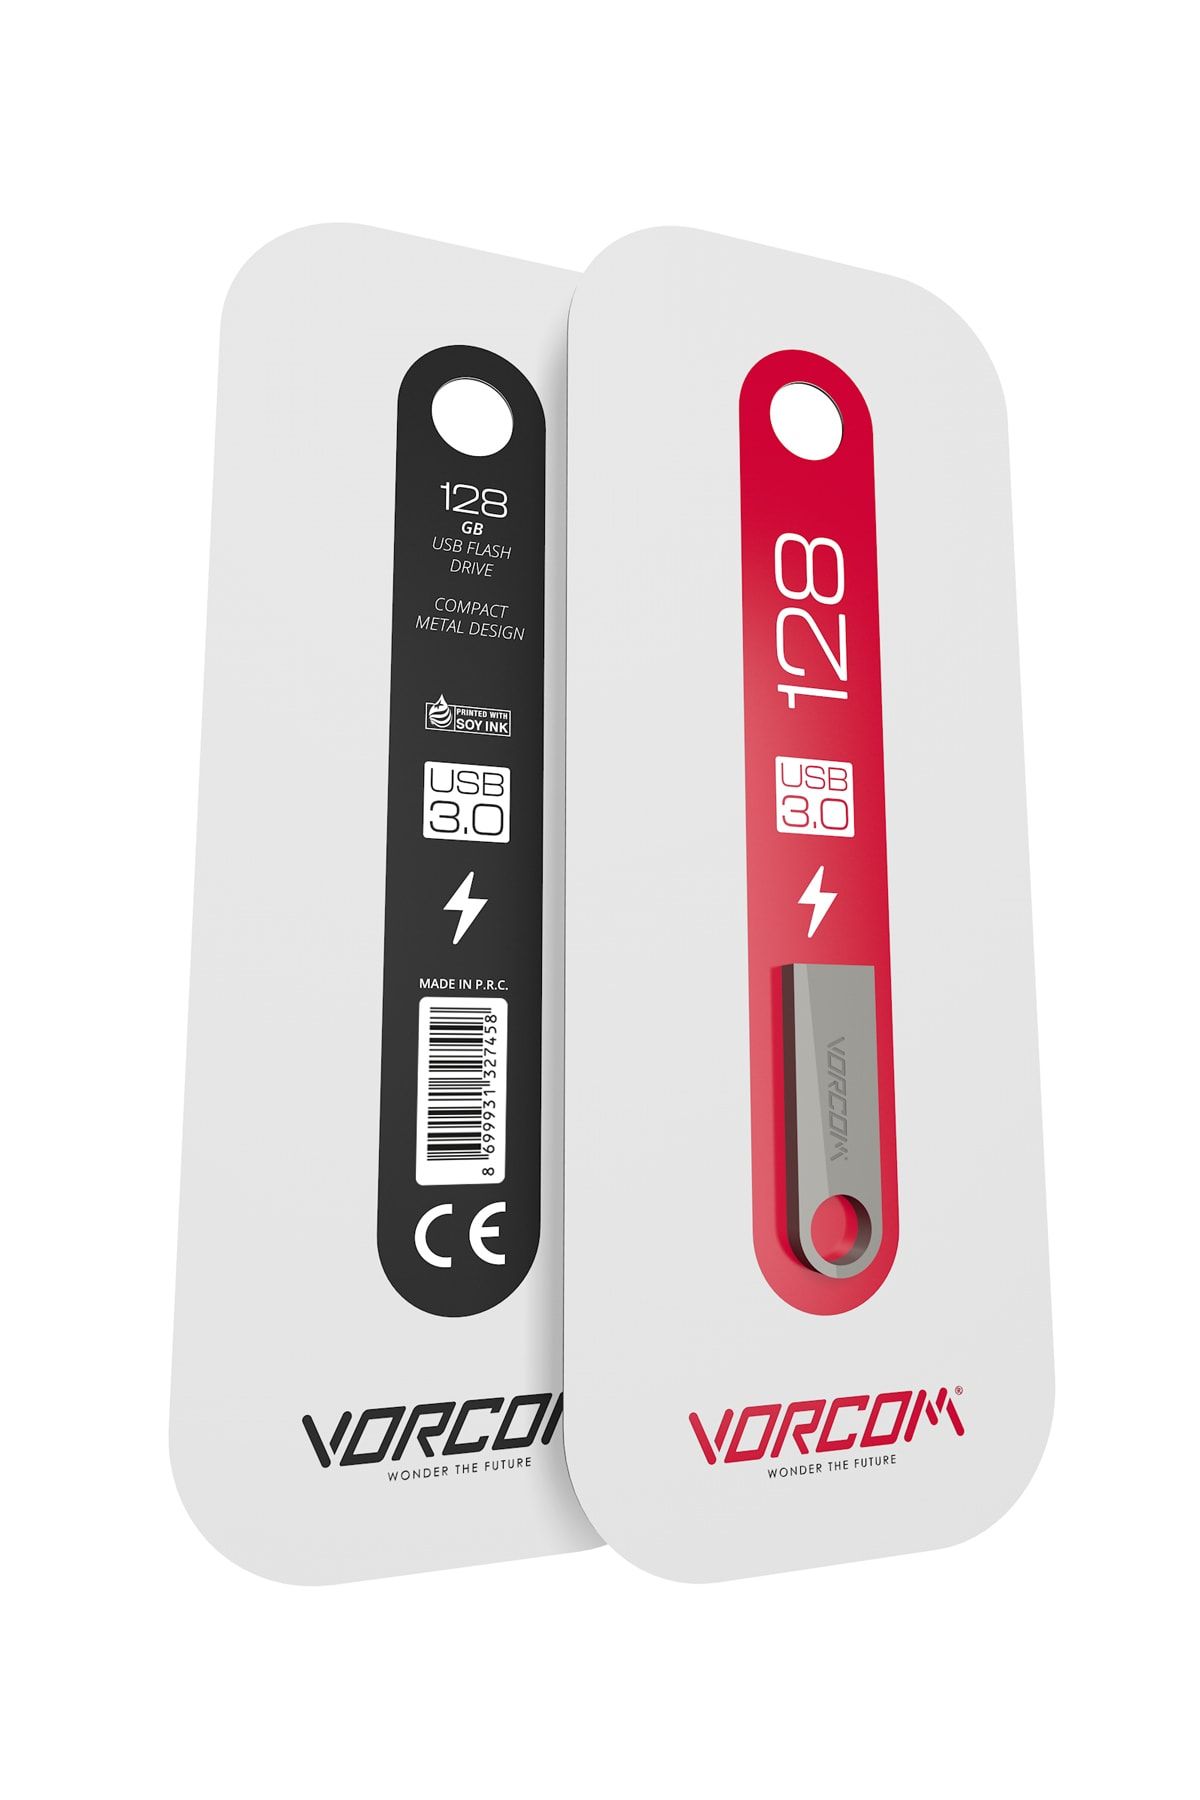 Vorcom 128 GB Usb Flash Bellek (Yüksek Hızlı) Metal Usb 3.0 Data Traveler Okuma Hızı Up to 100 MB/s